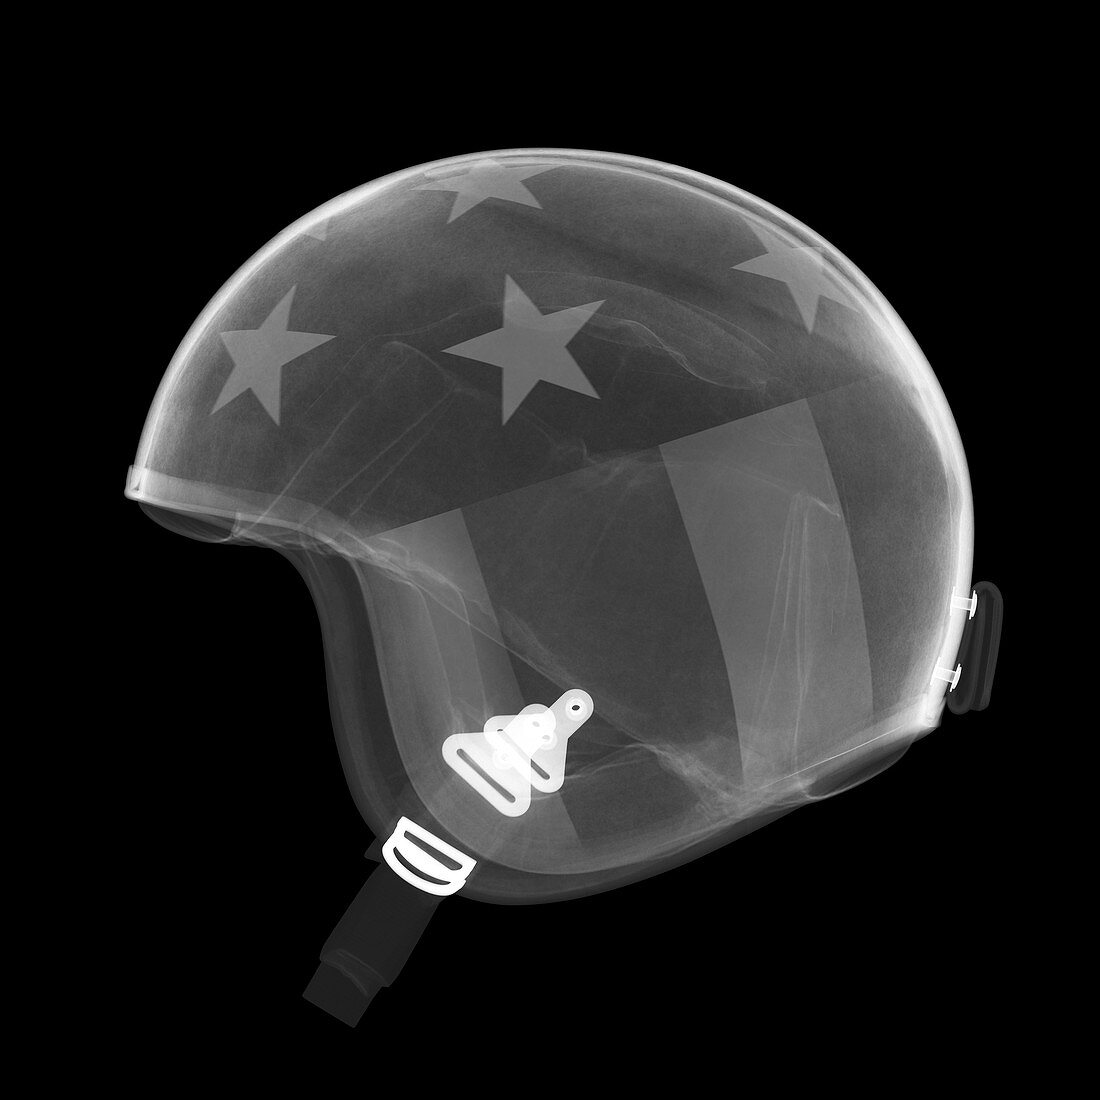 Stars and stripes helmet, X-ray